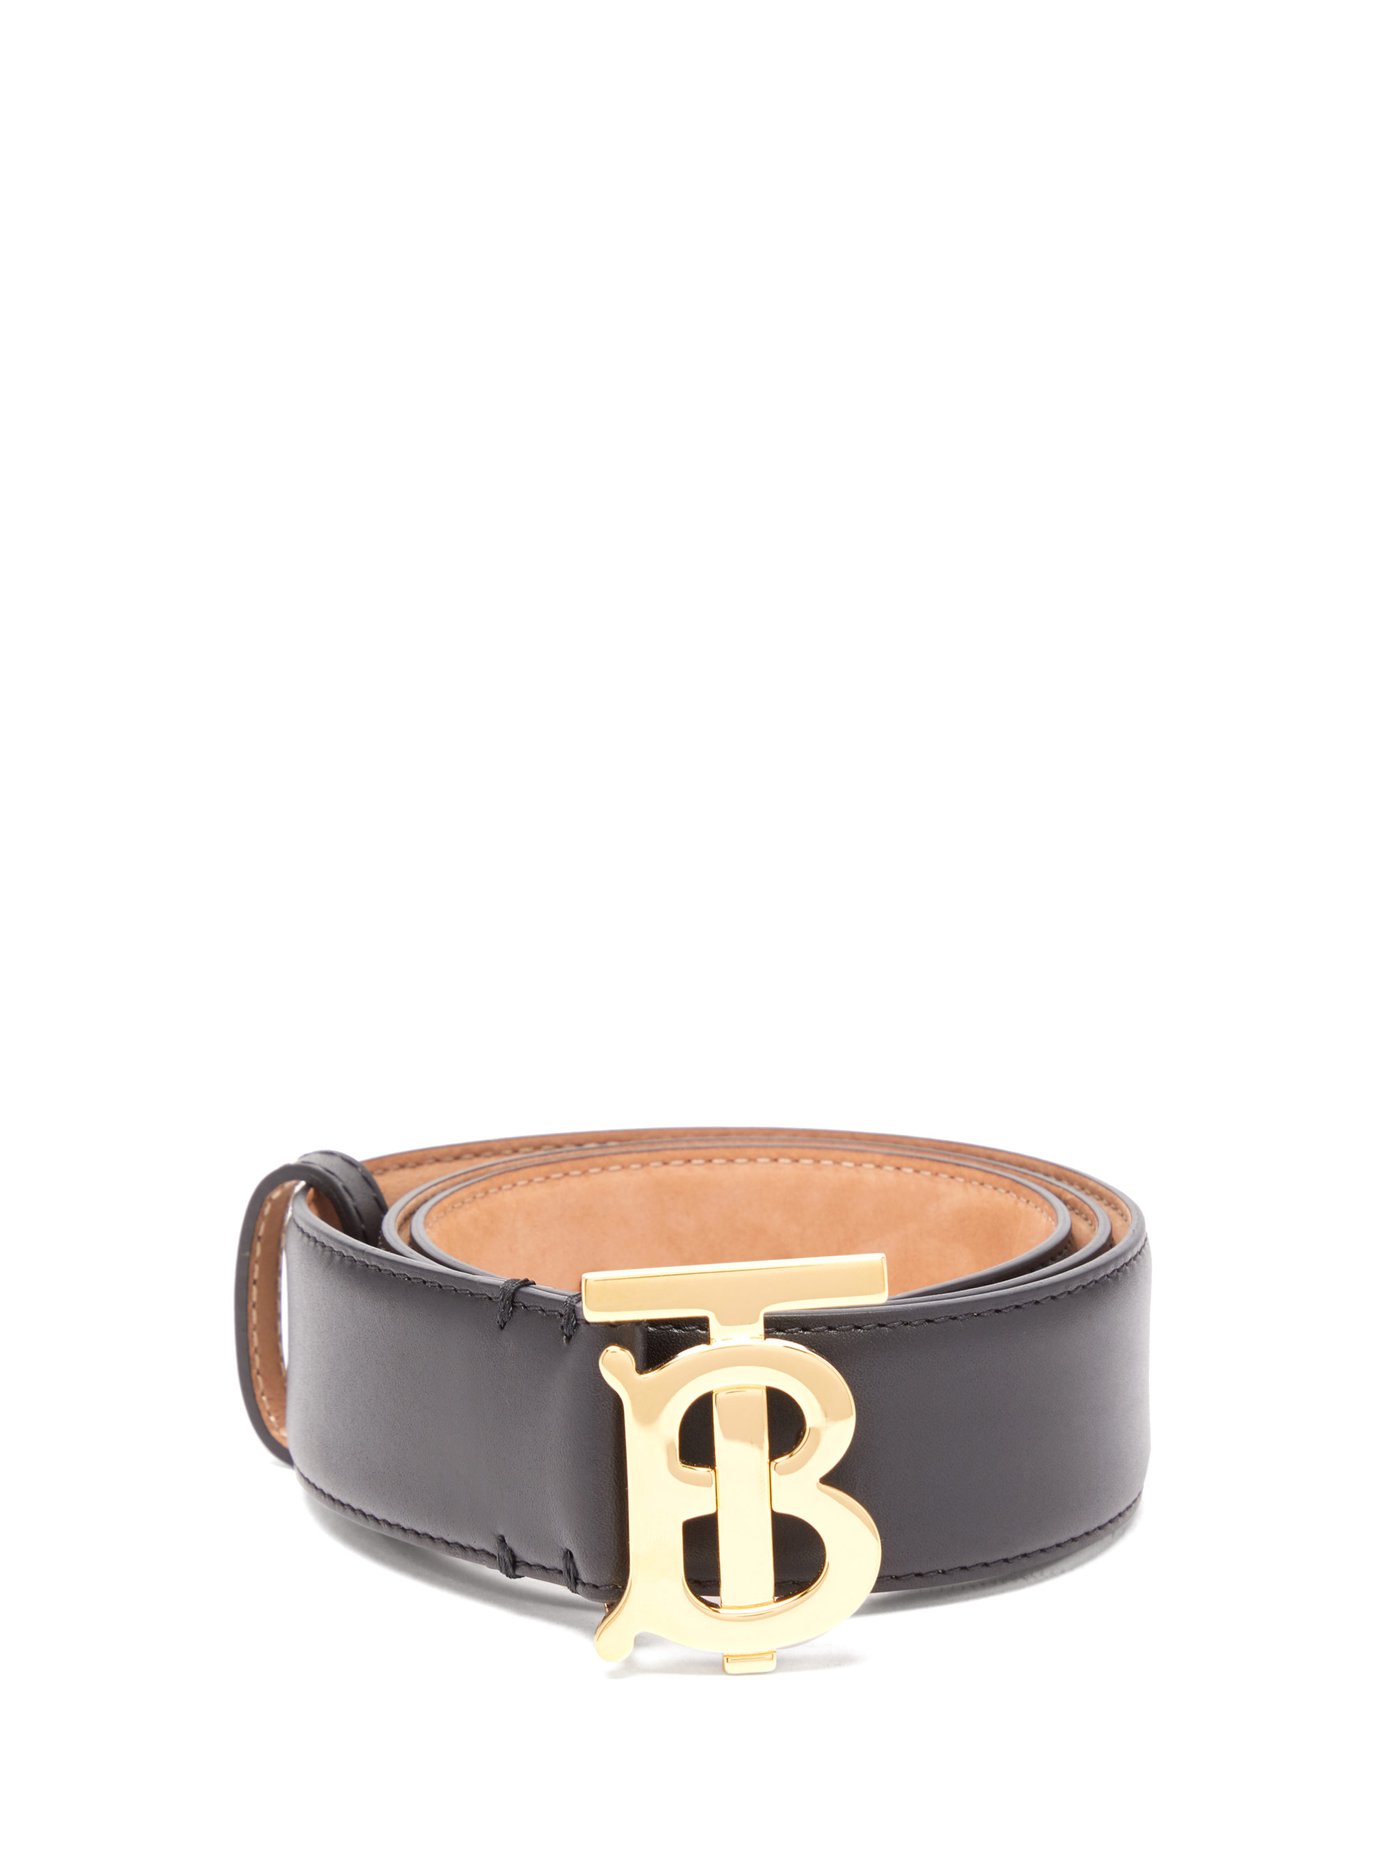 burberry leather belt